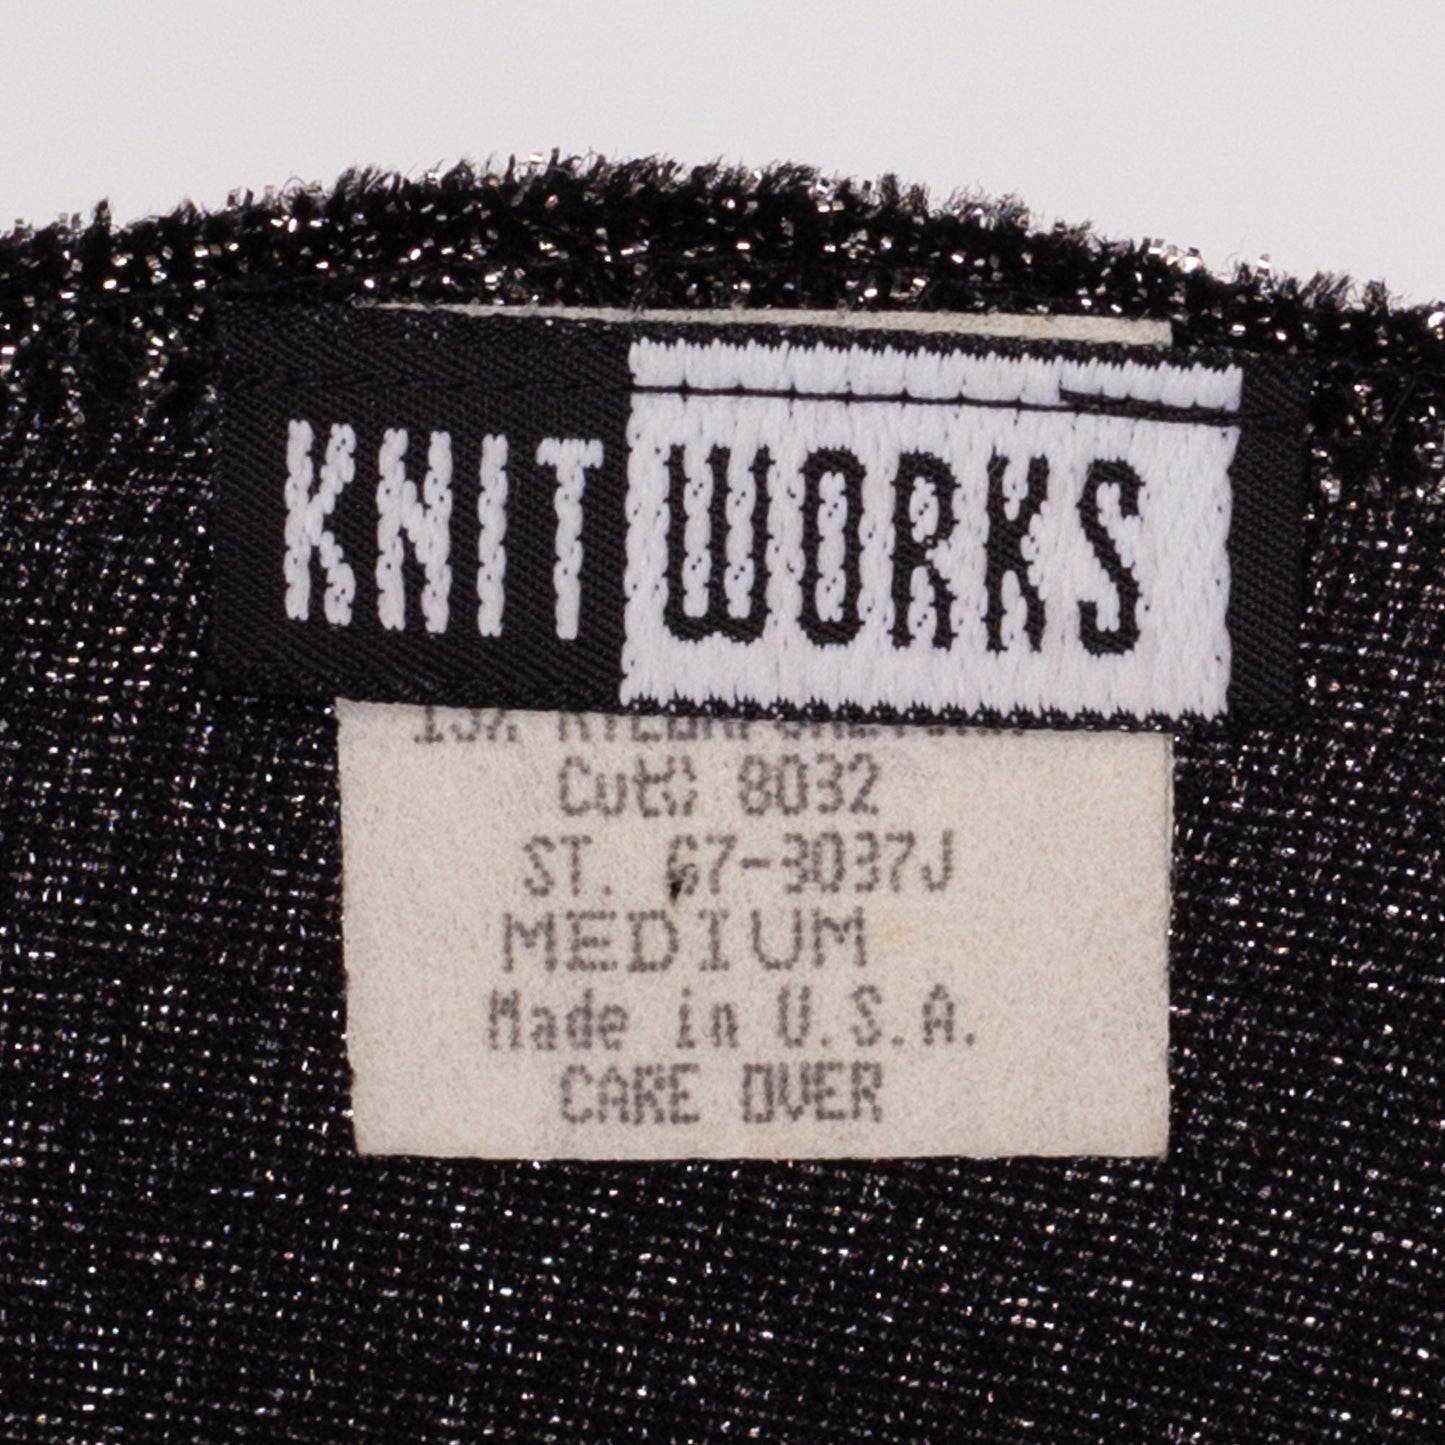 M| 90s Black & Silver Metallic Shirt - Medium | Vintage Short Sleeve Fitted Knit Top